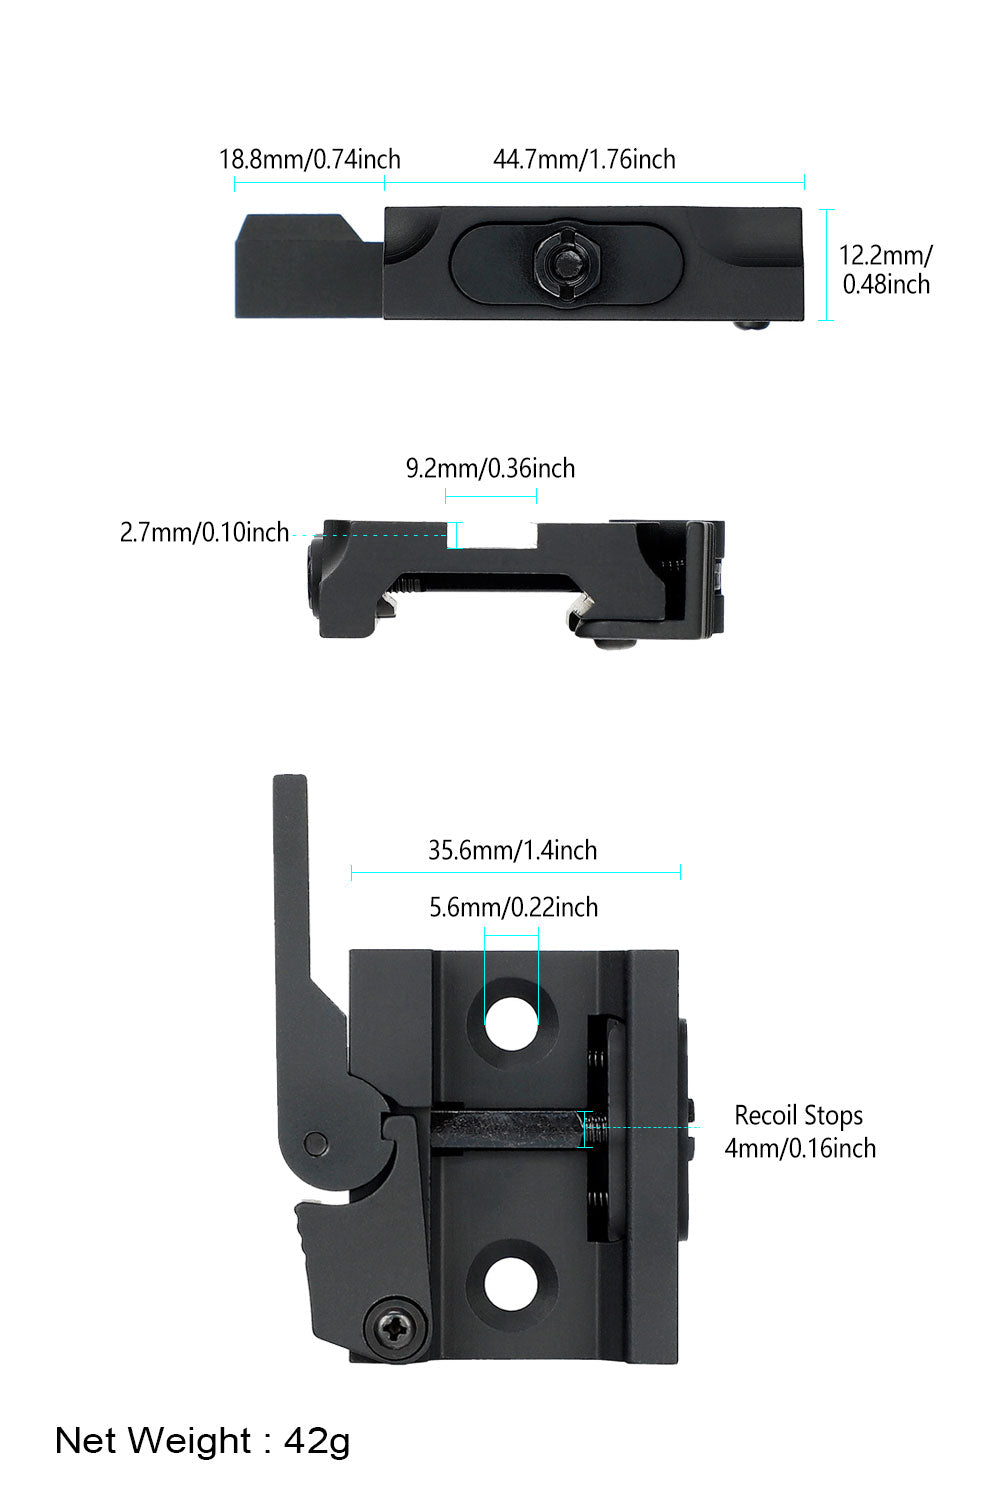 ohhunt Bipod QD Riser Mount Adaptor 17S Style 0.5" Autolock